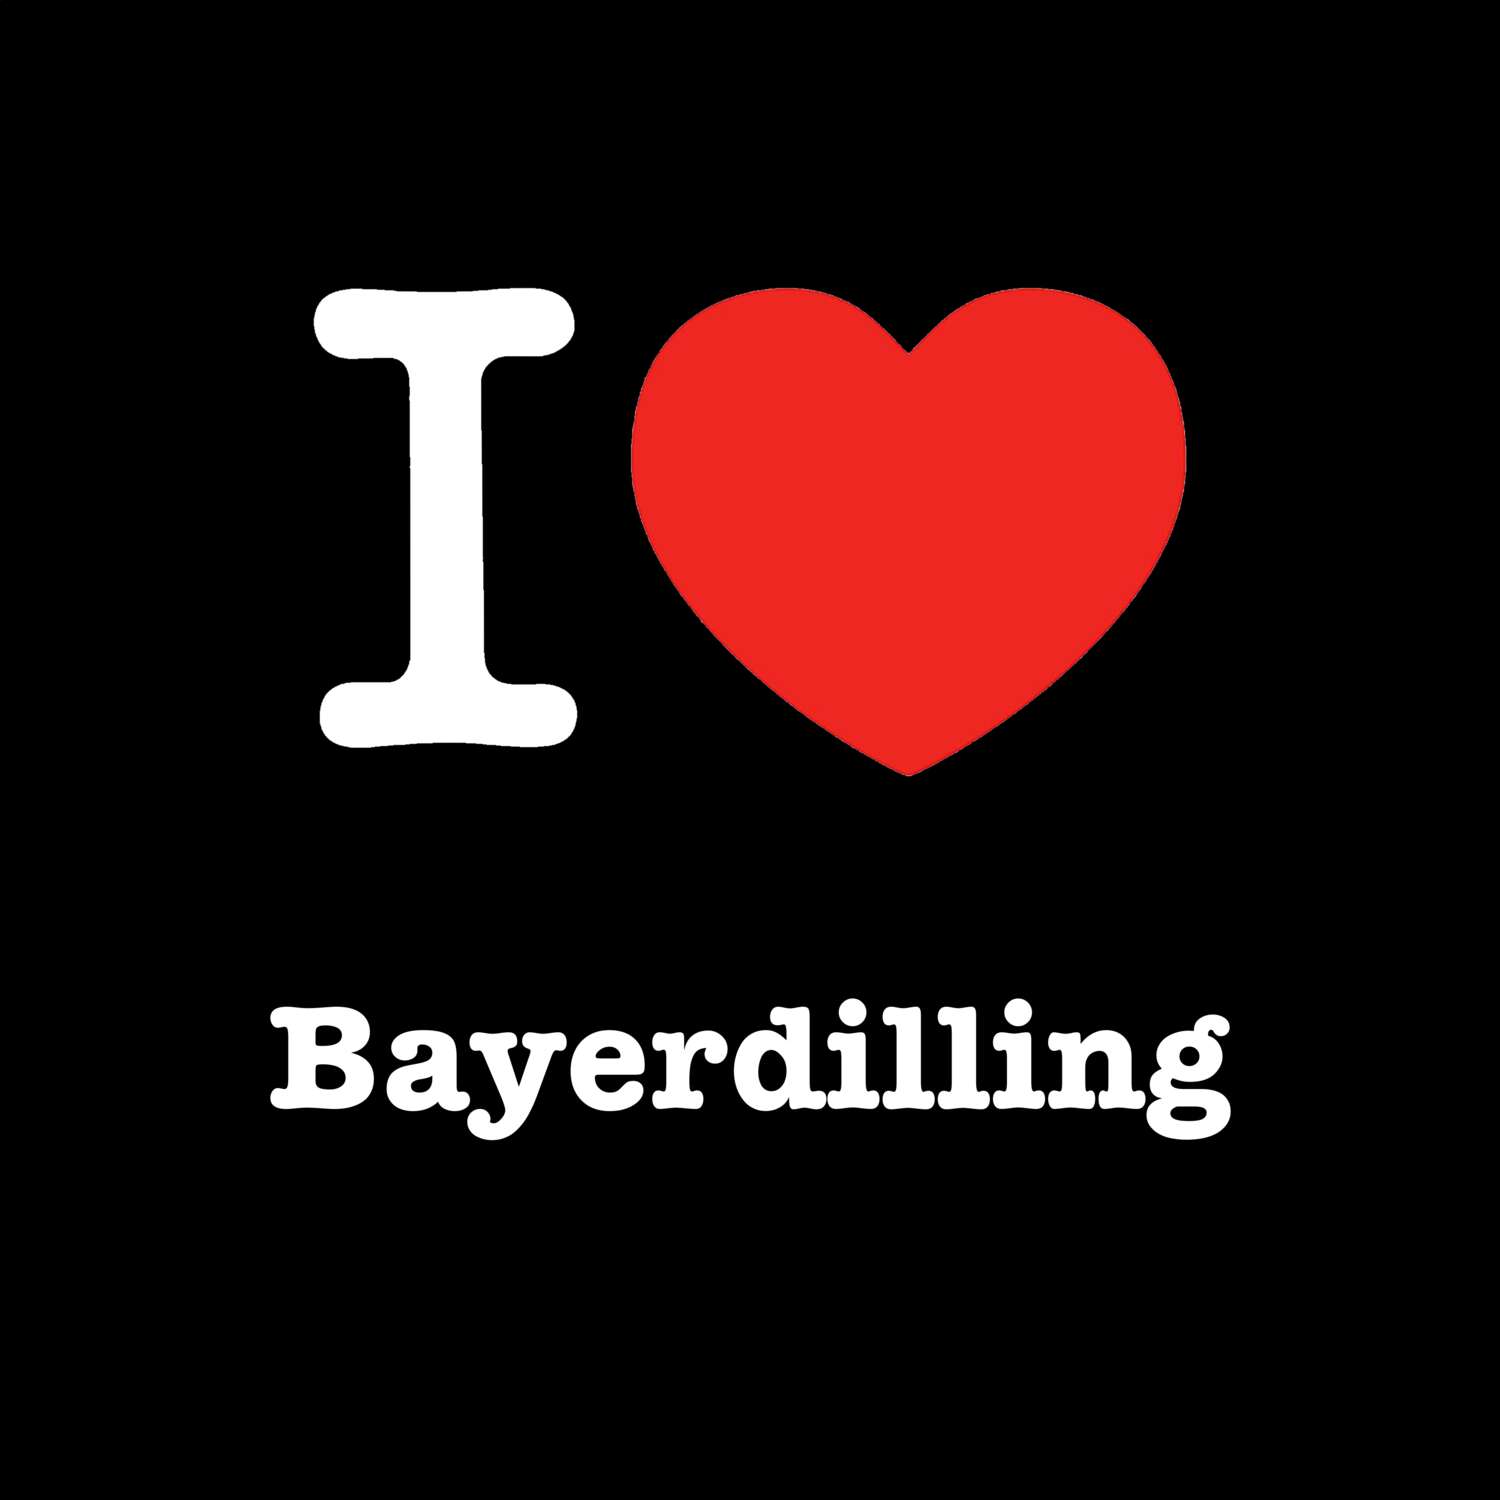 Bayerdilling T-Shirt »I love«